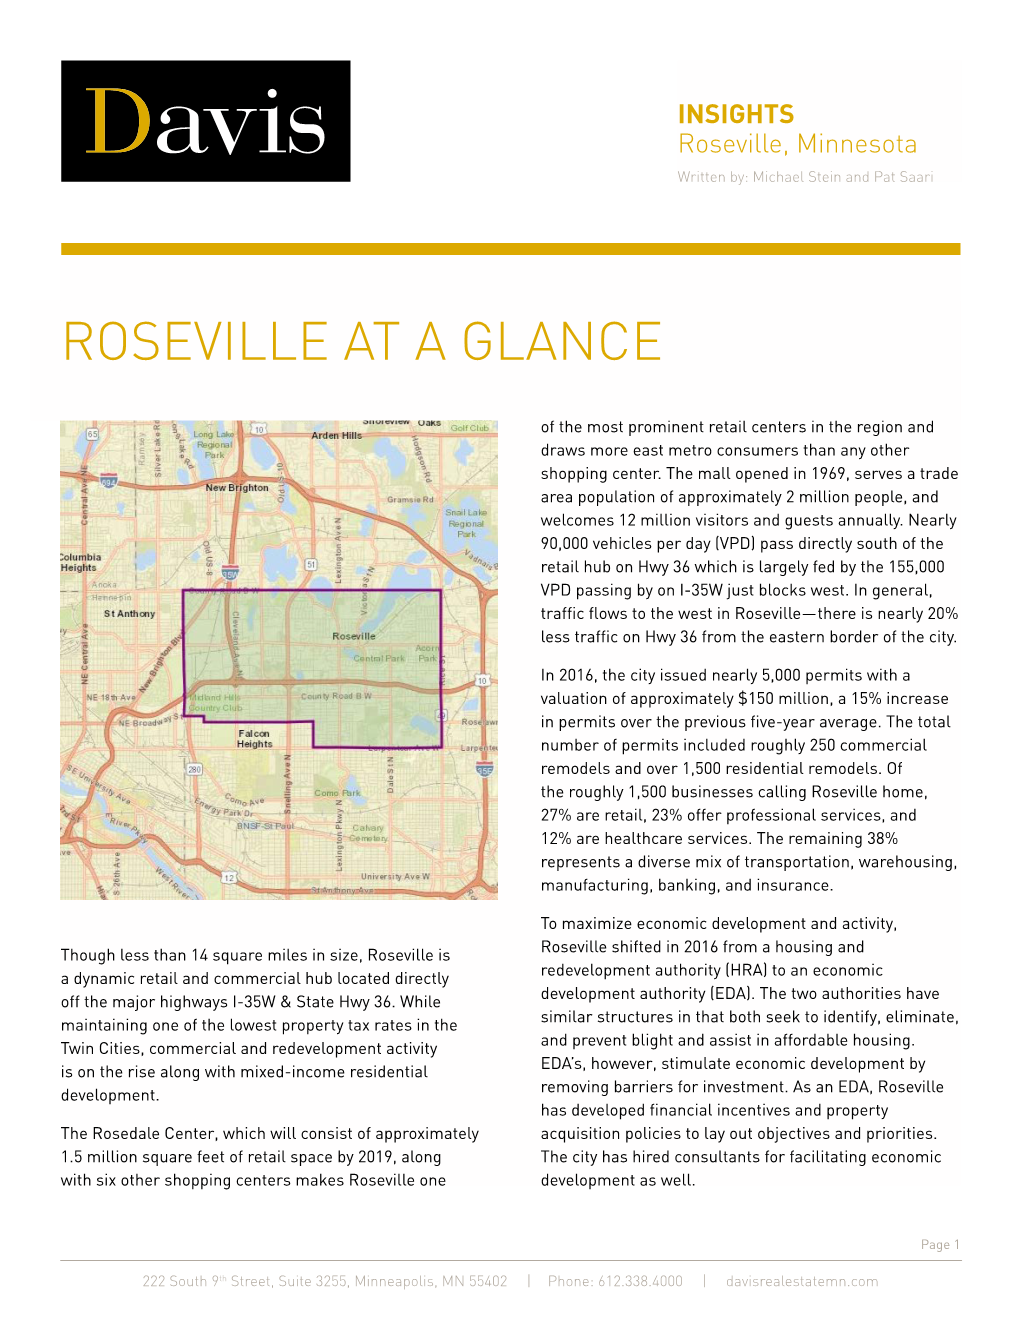 Roseville at a Glance